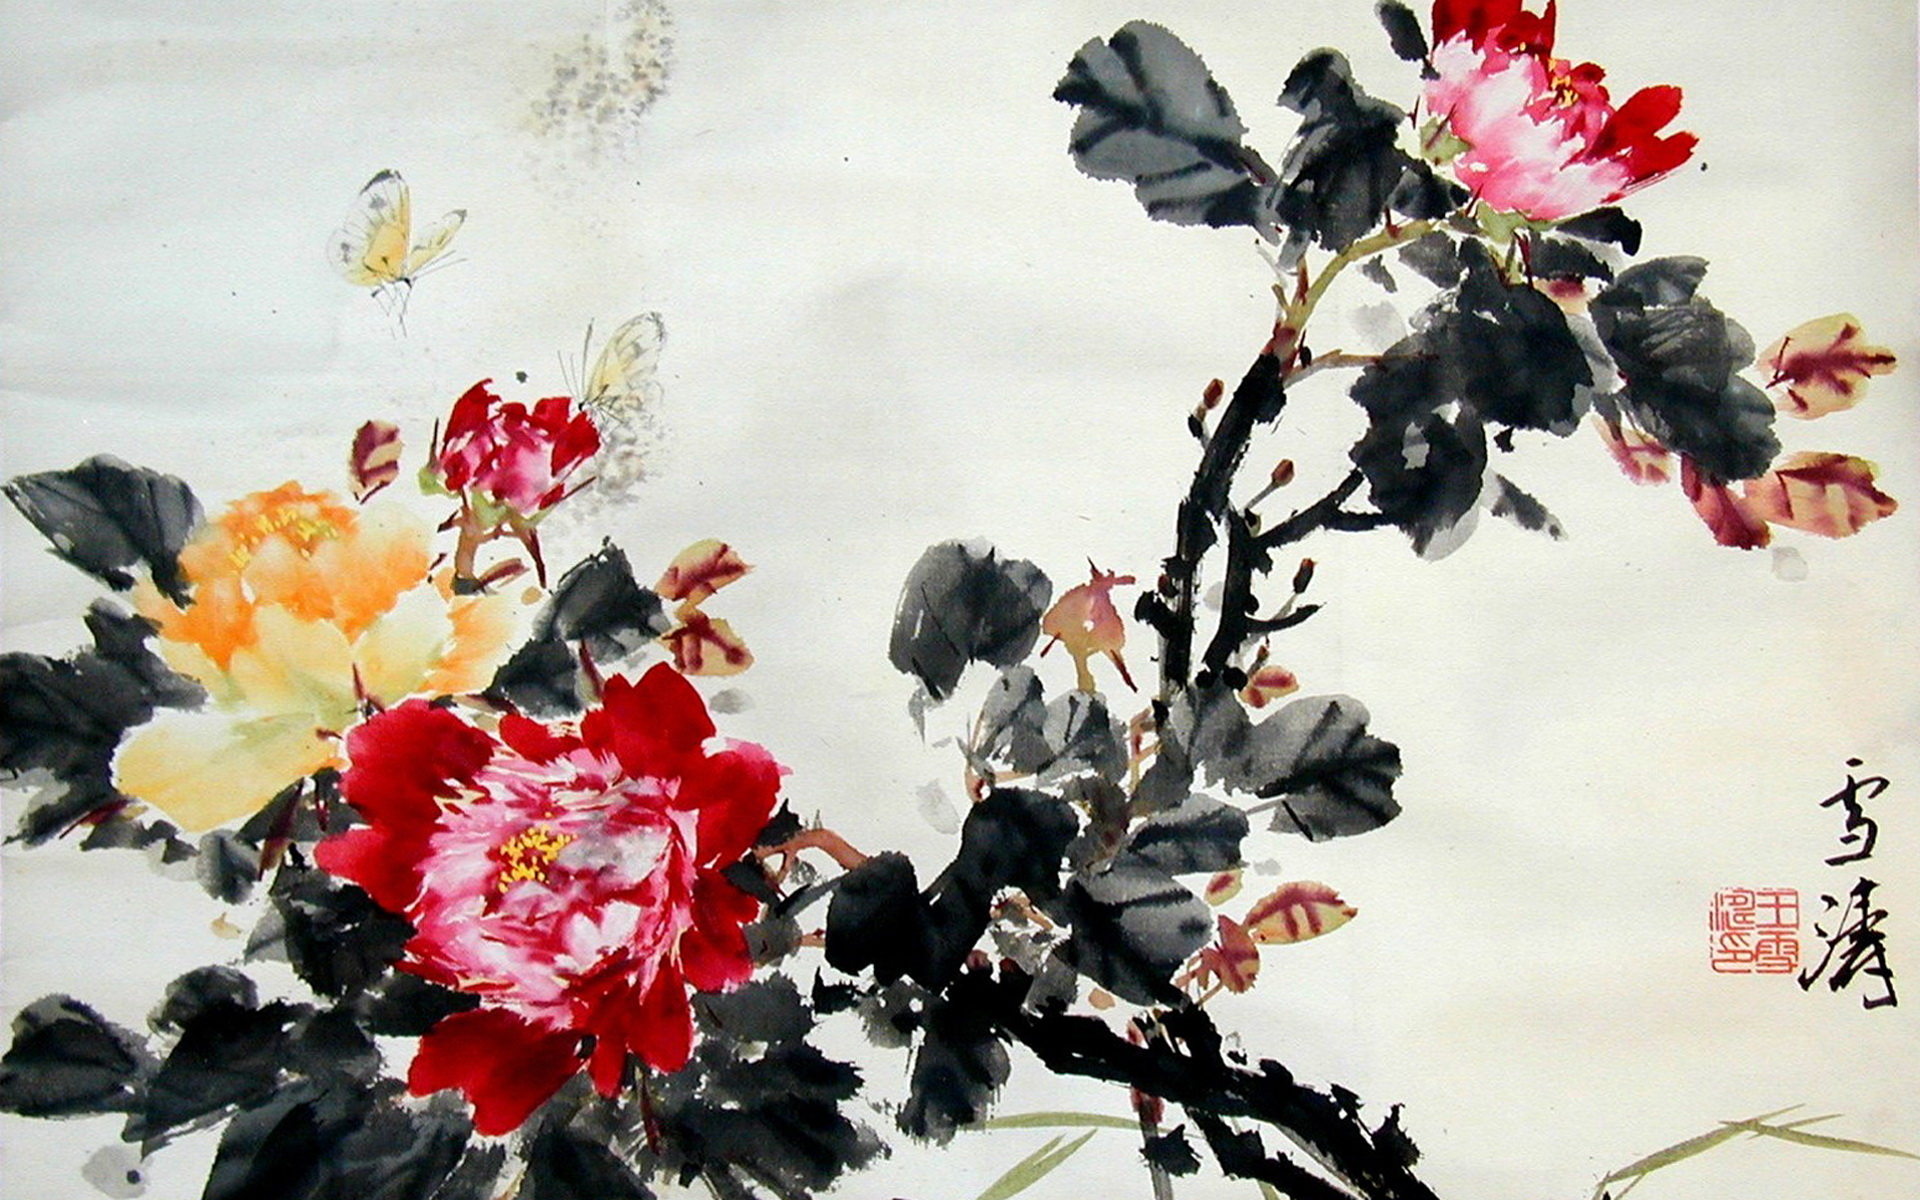 Artistic Chinese Art 1920x1200